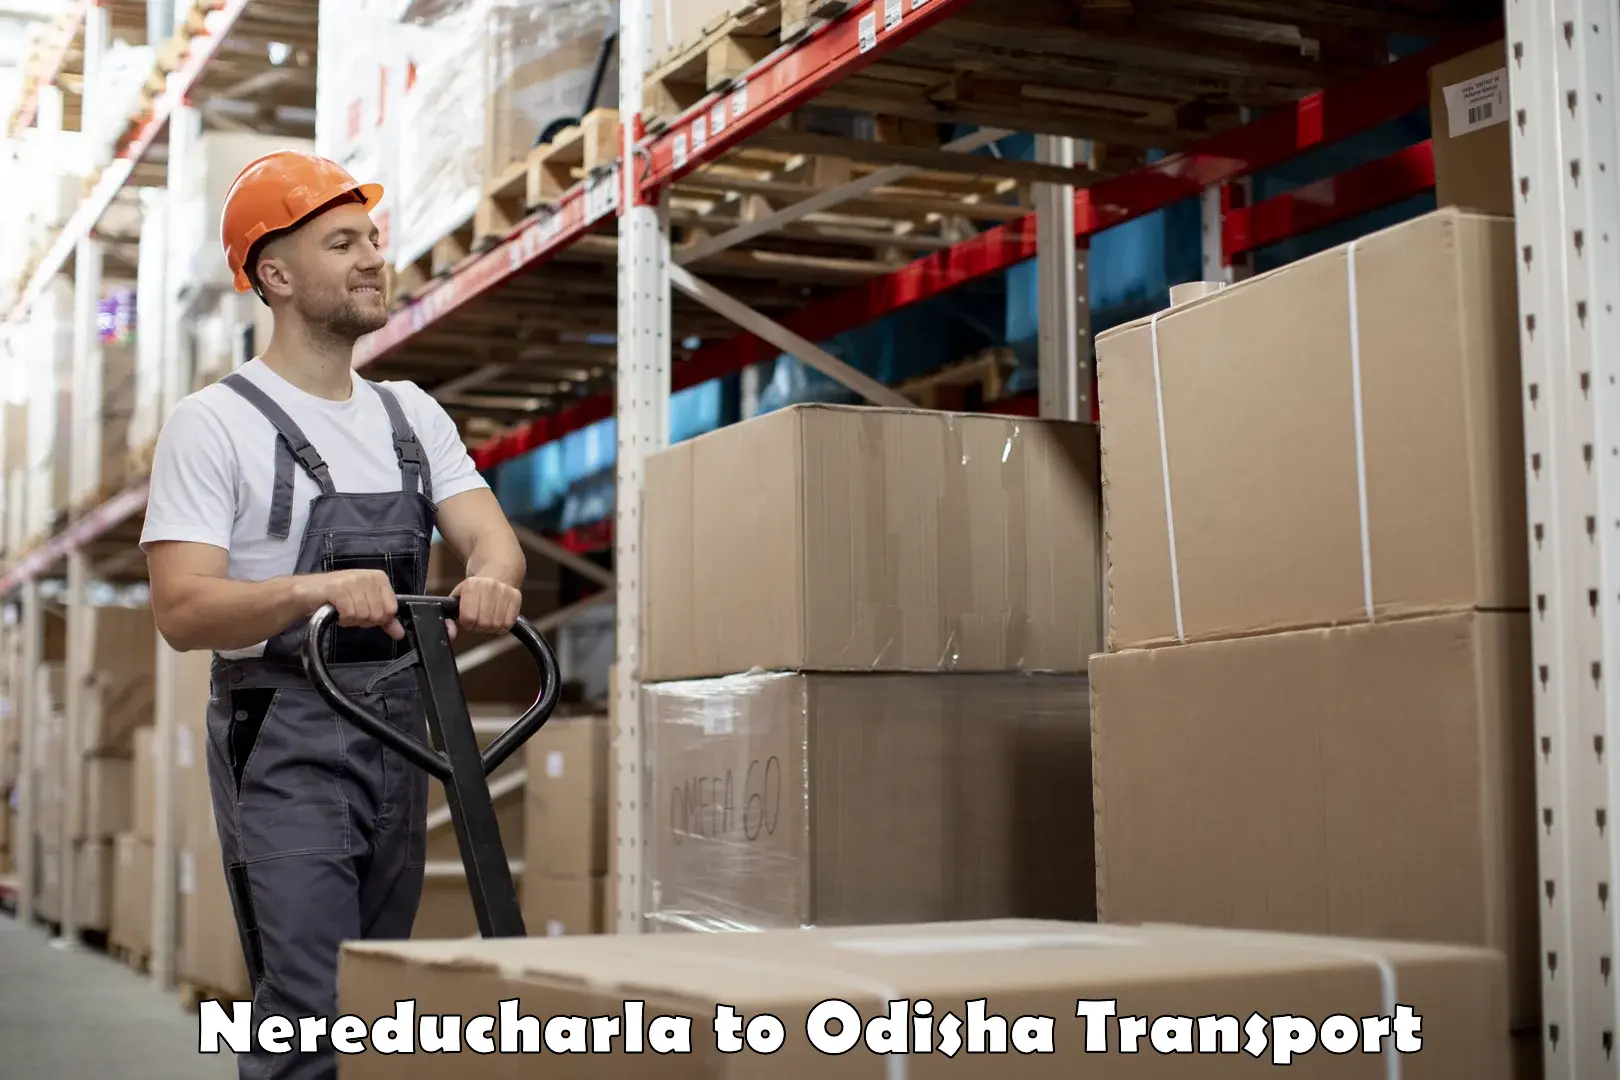 Container transport service Nereducharla to Bhubaneswar